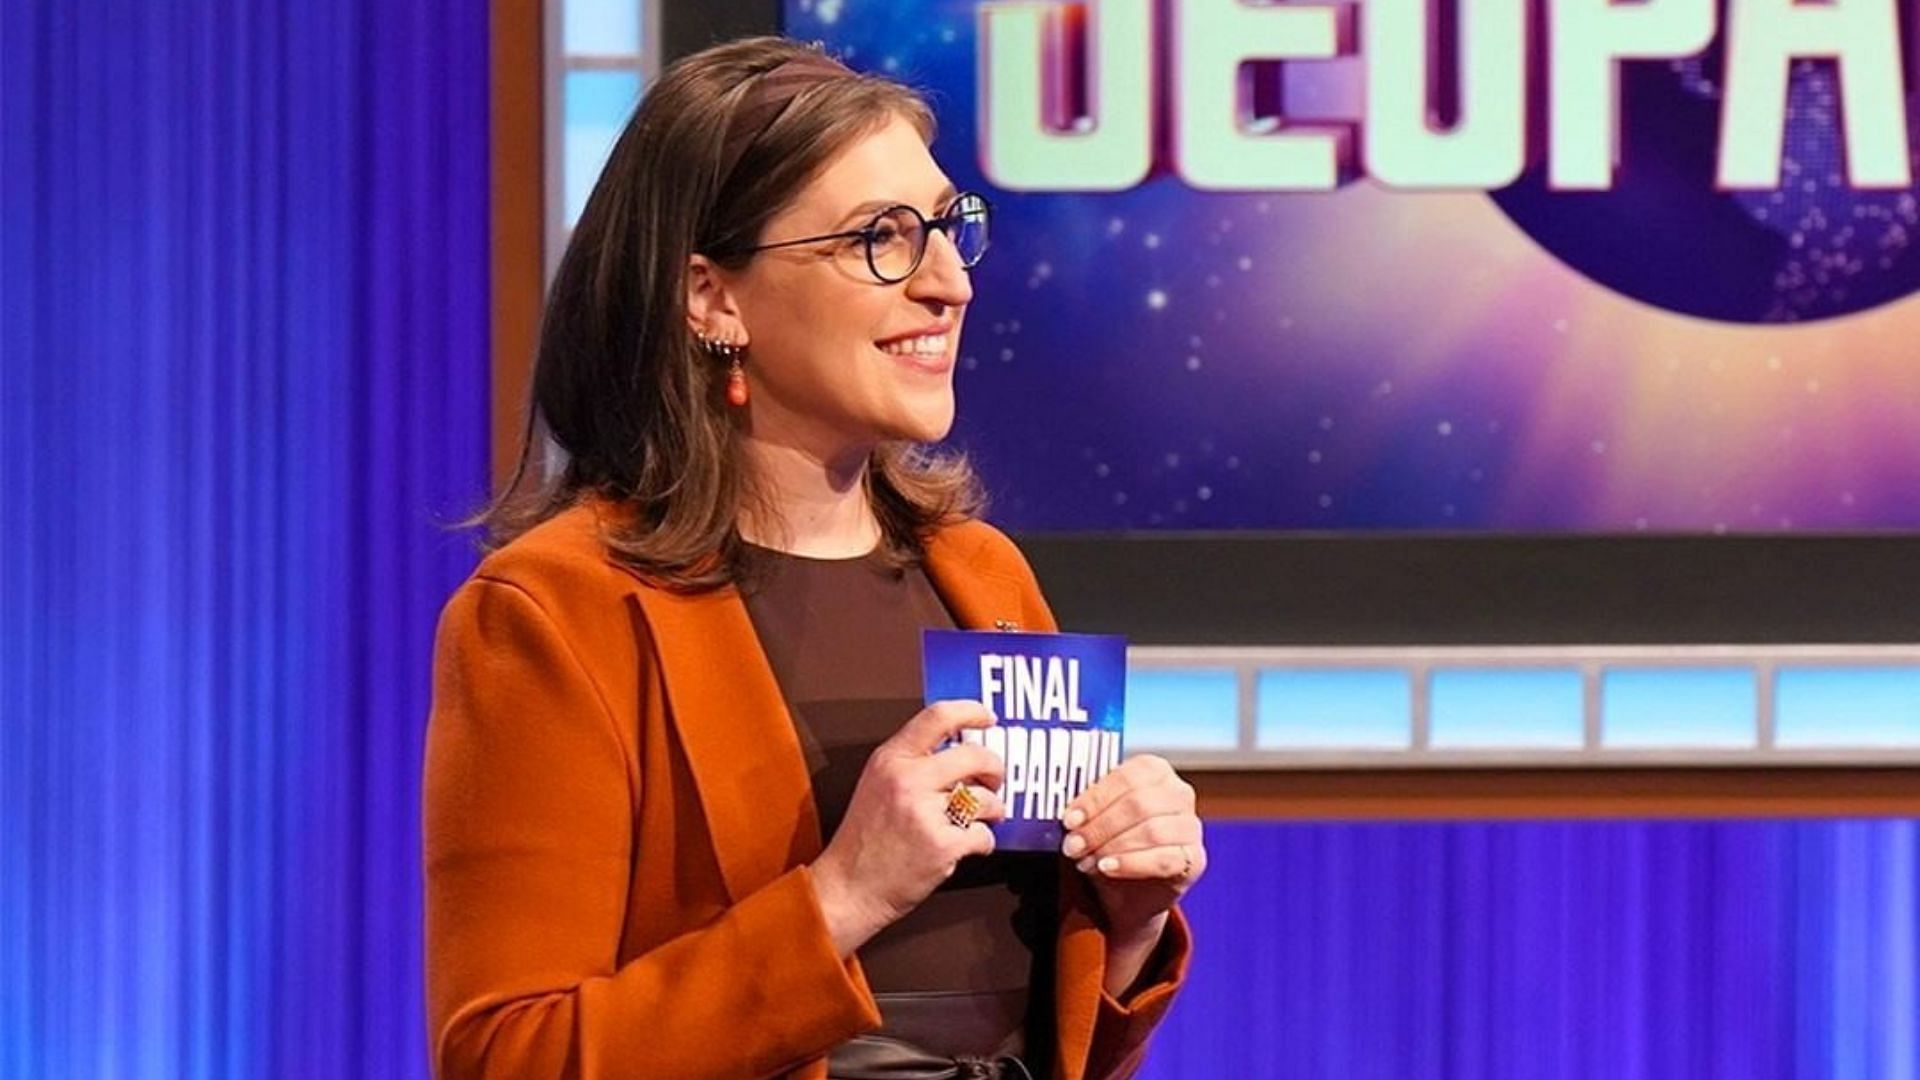 Who won Jeopardy! tonight? June 9, 2022, Thursday